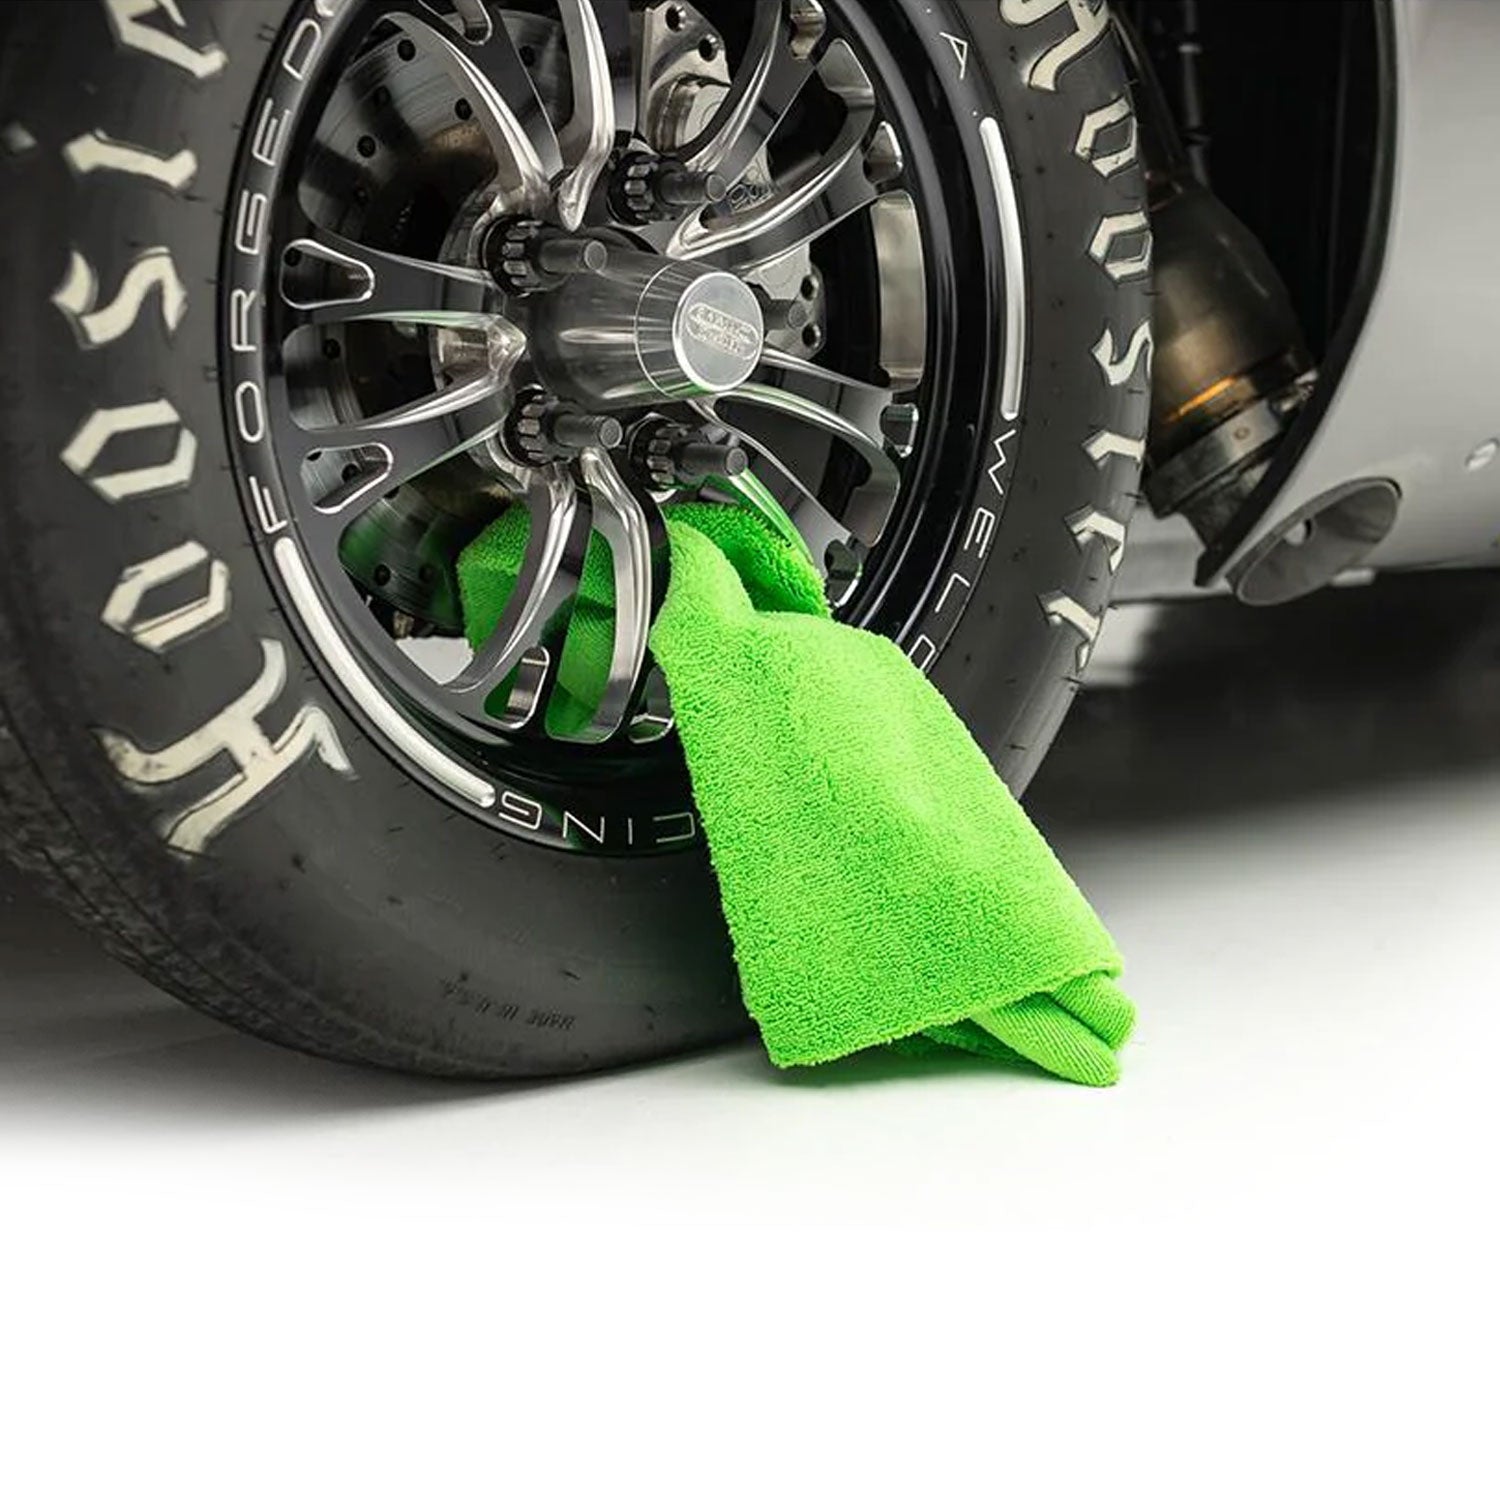 creature-drying-towel-in-race-car-wheel